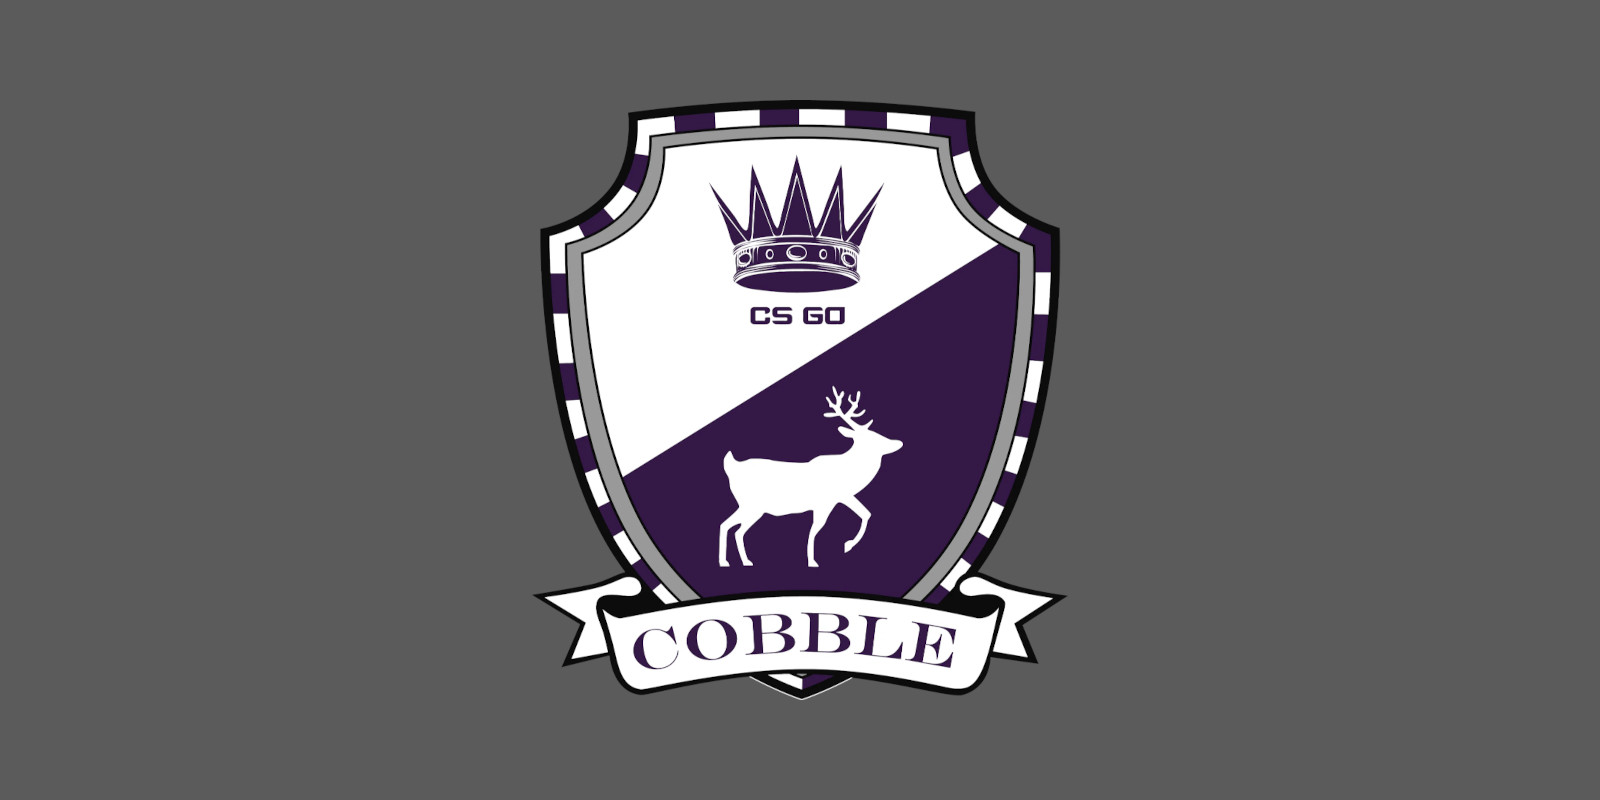 CS:GO - Series 2 - Cobblestone Collectible Pin 564.97 $